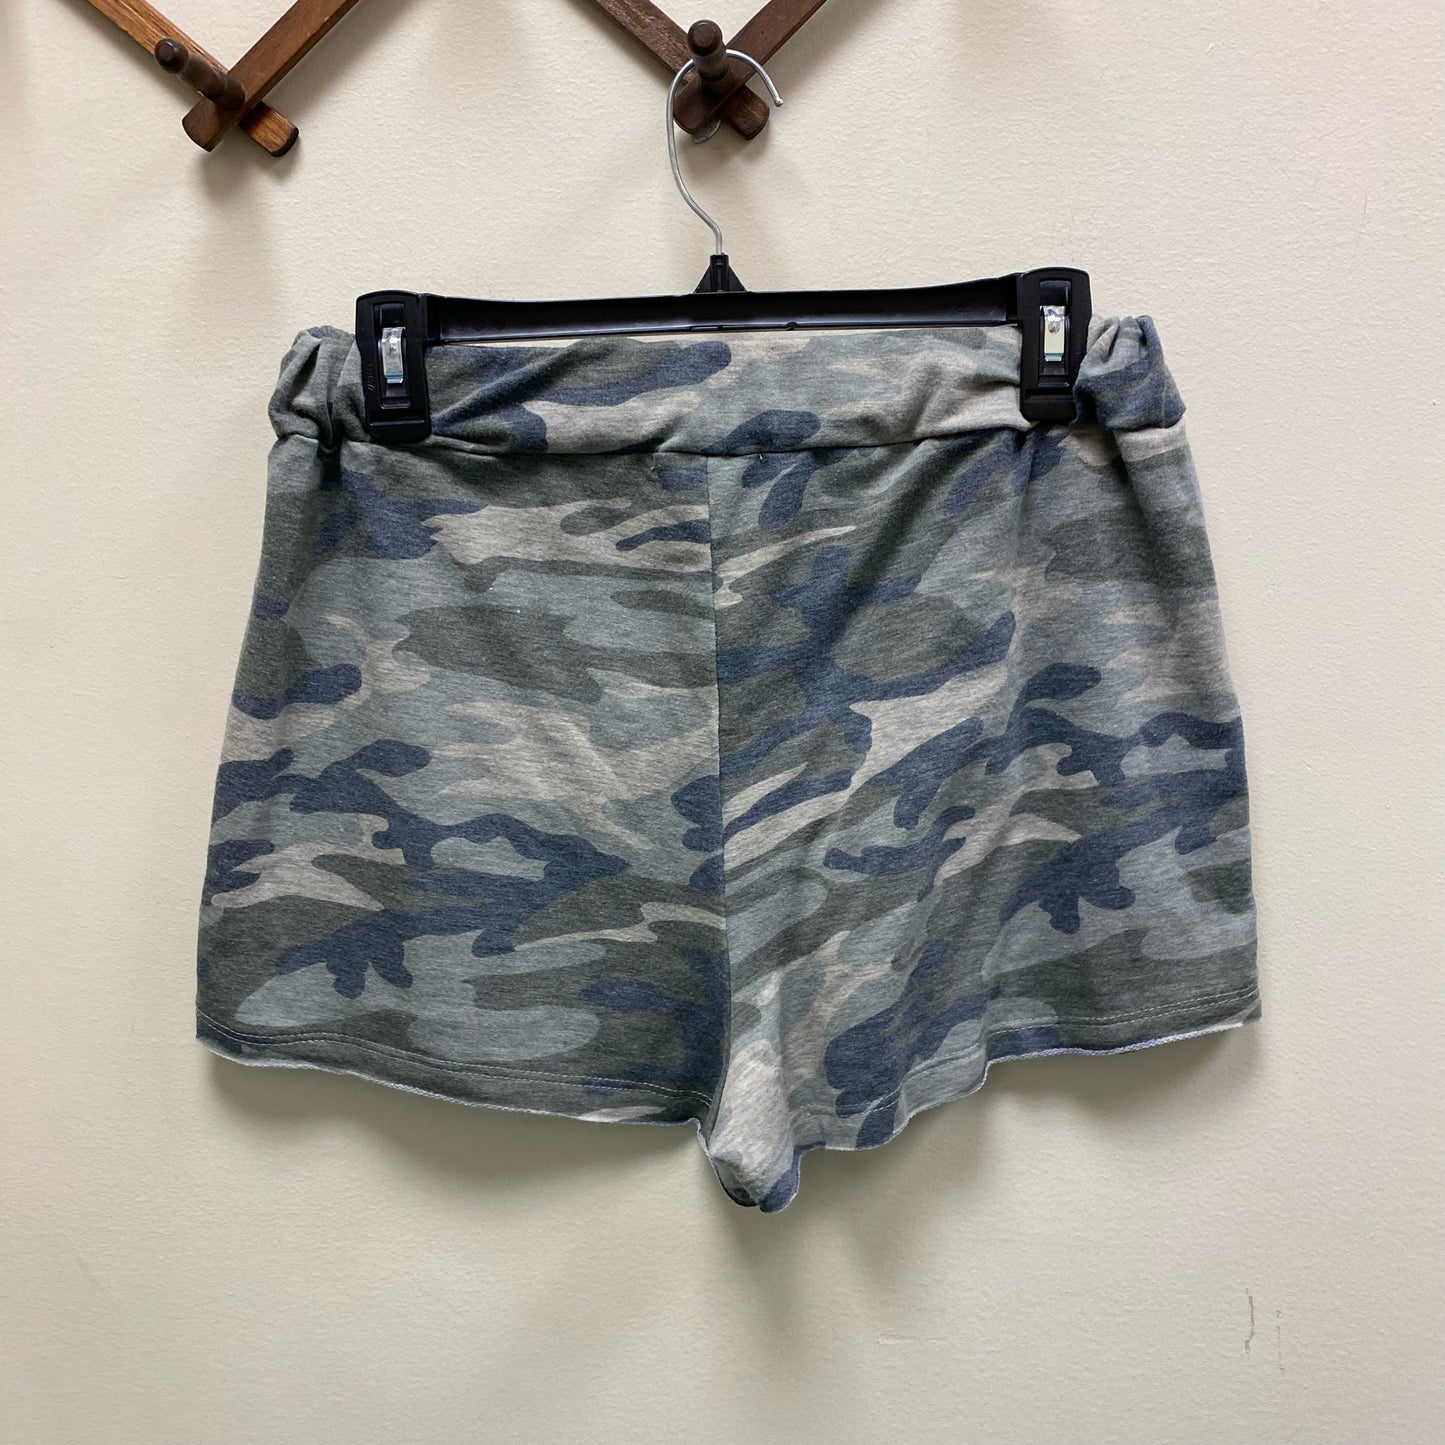 Entro Camo Print Pull-On Shorts - Size Medium